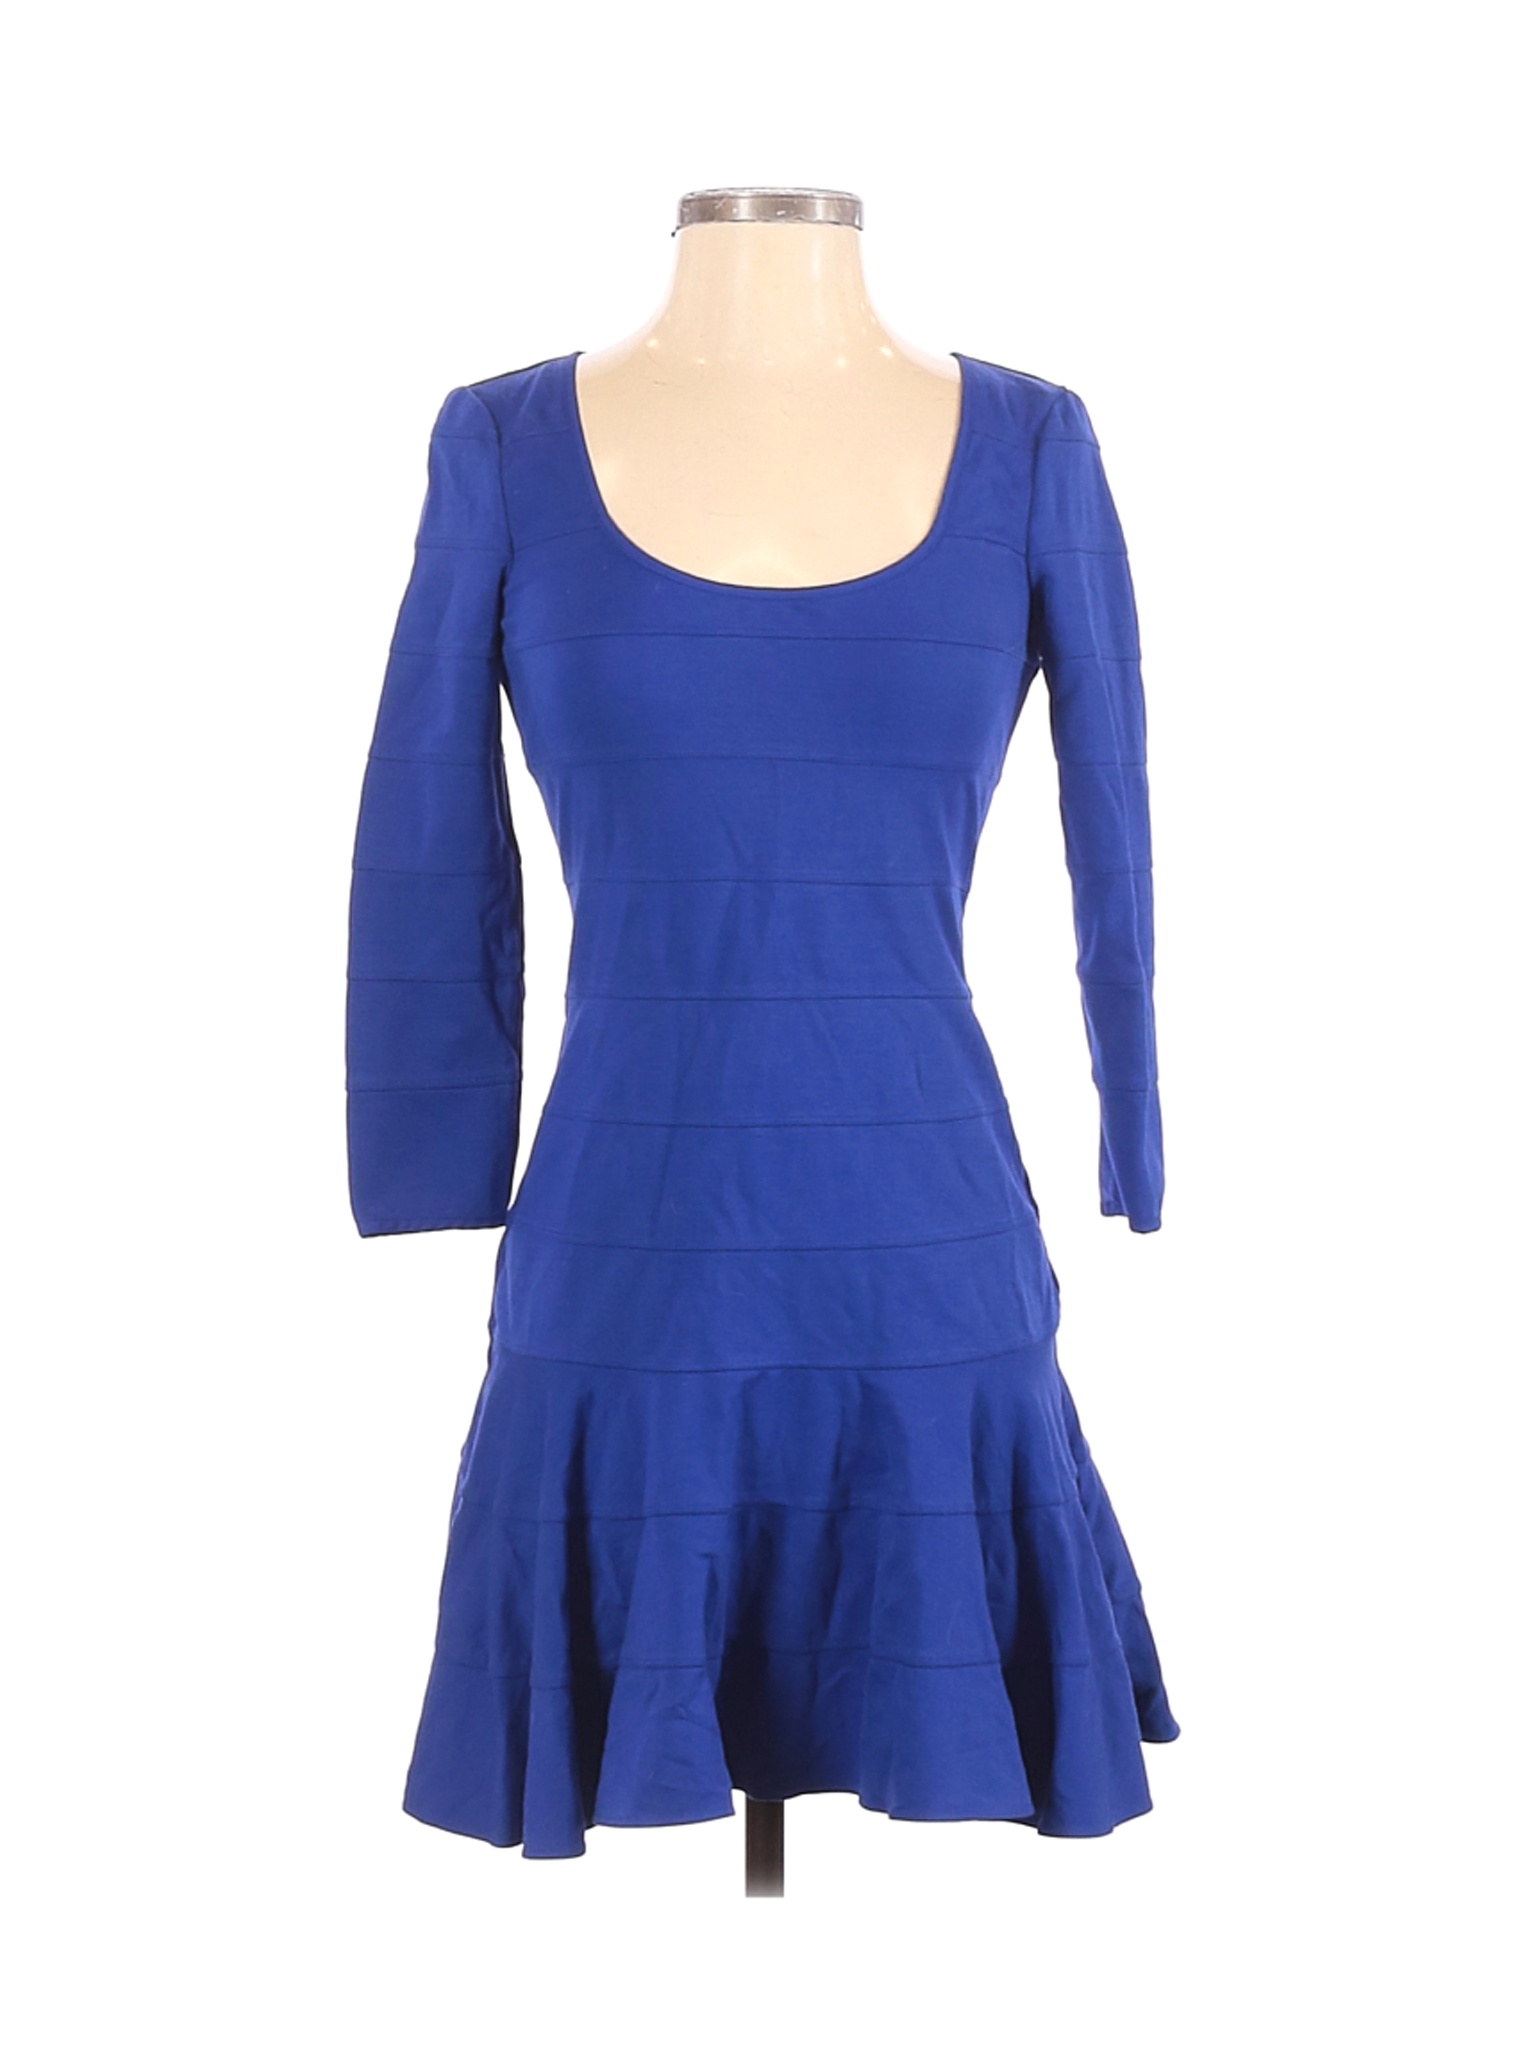 Juicy Couture Women Blue Casual Dress 4 | eBay